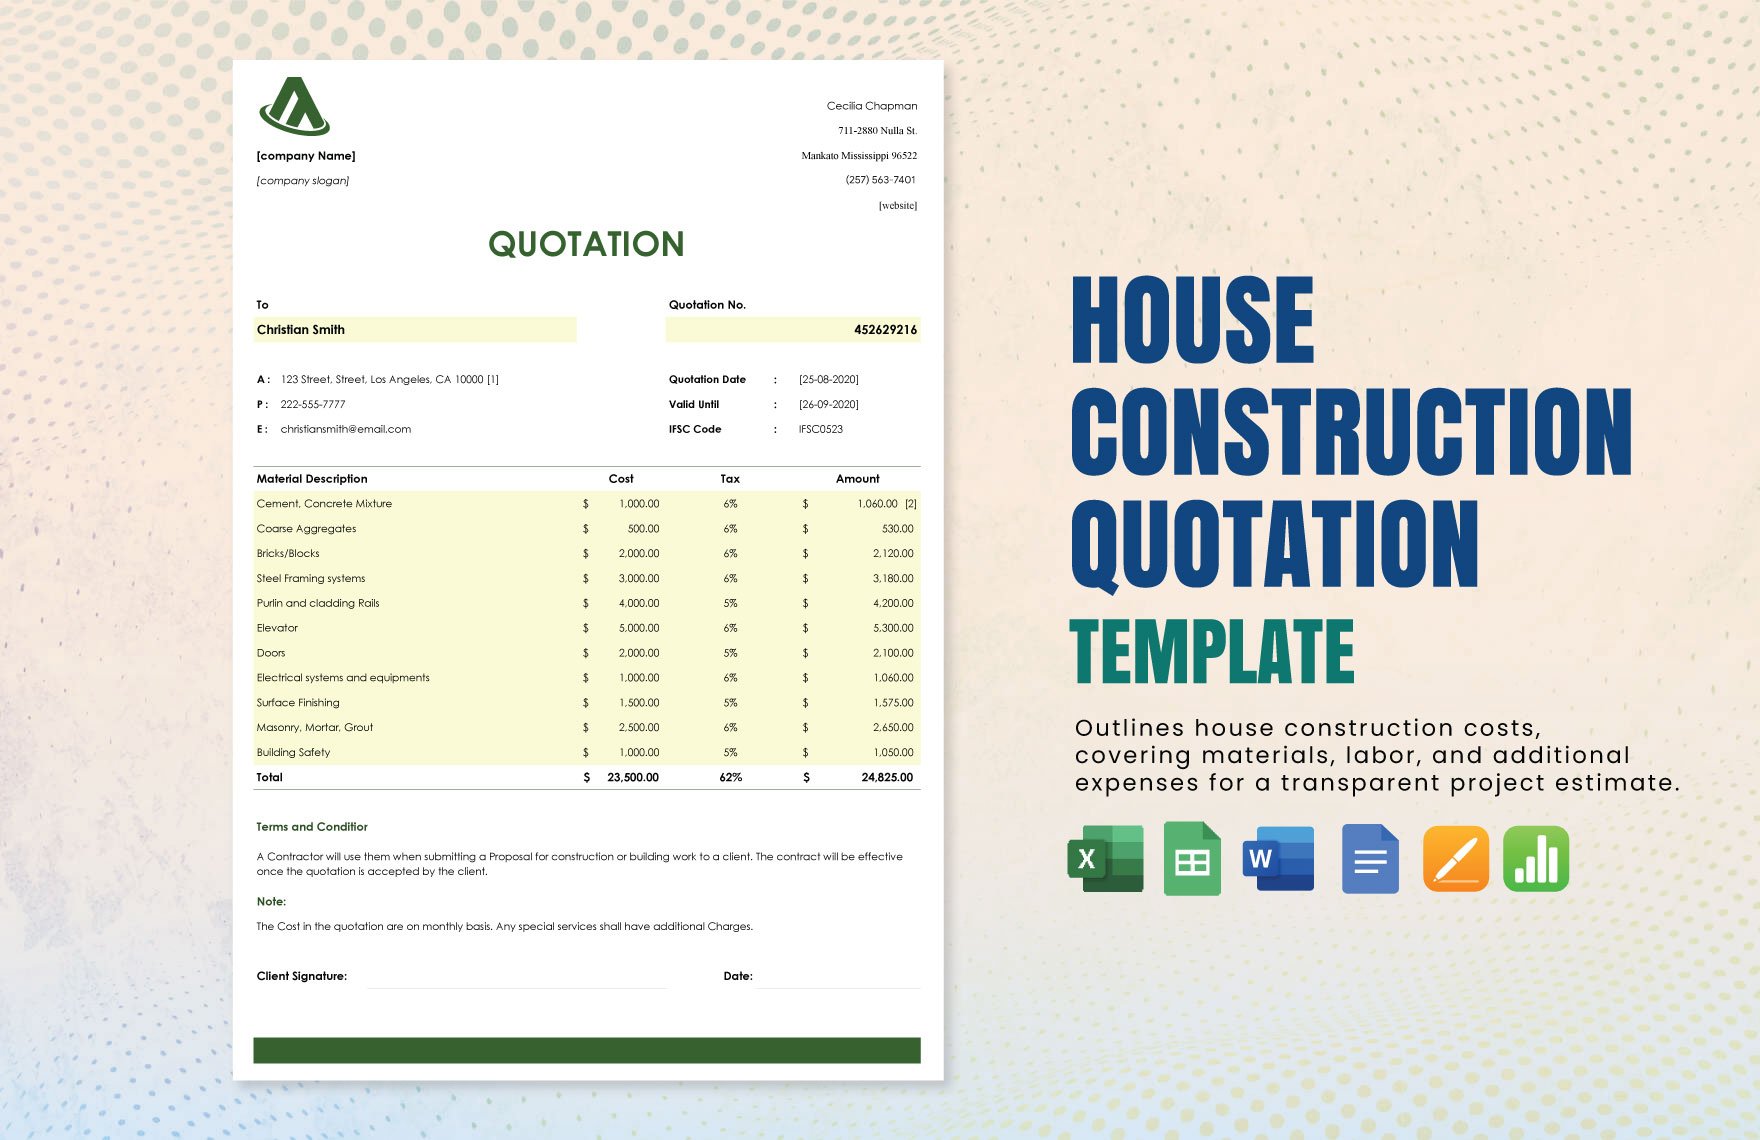 House Construction Quotation